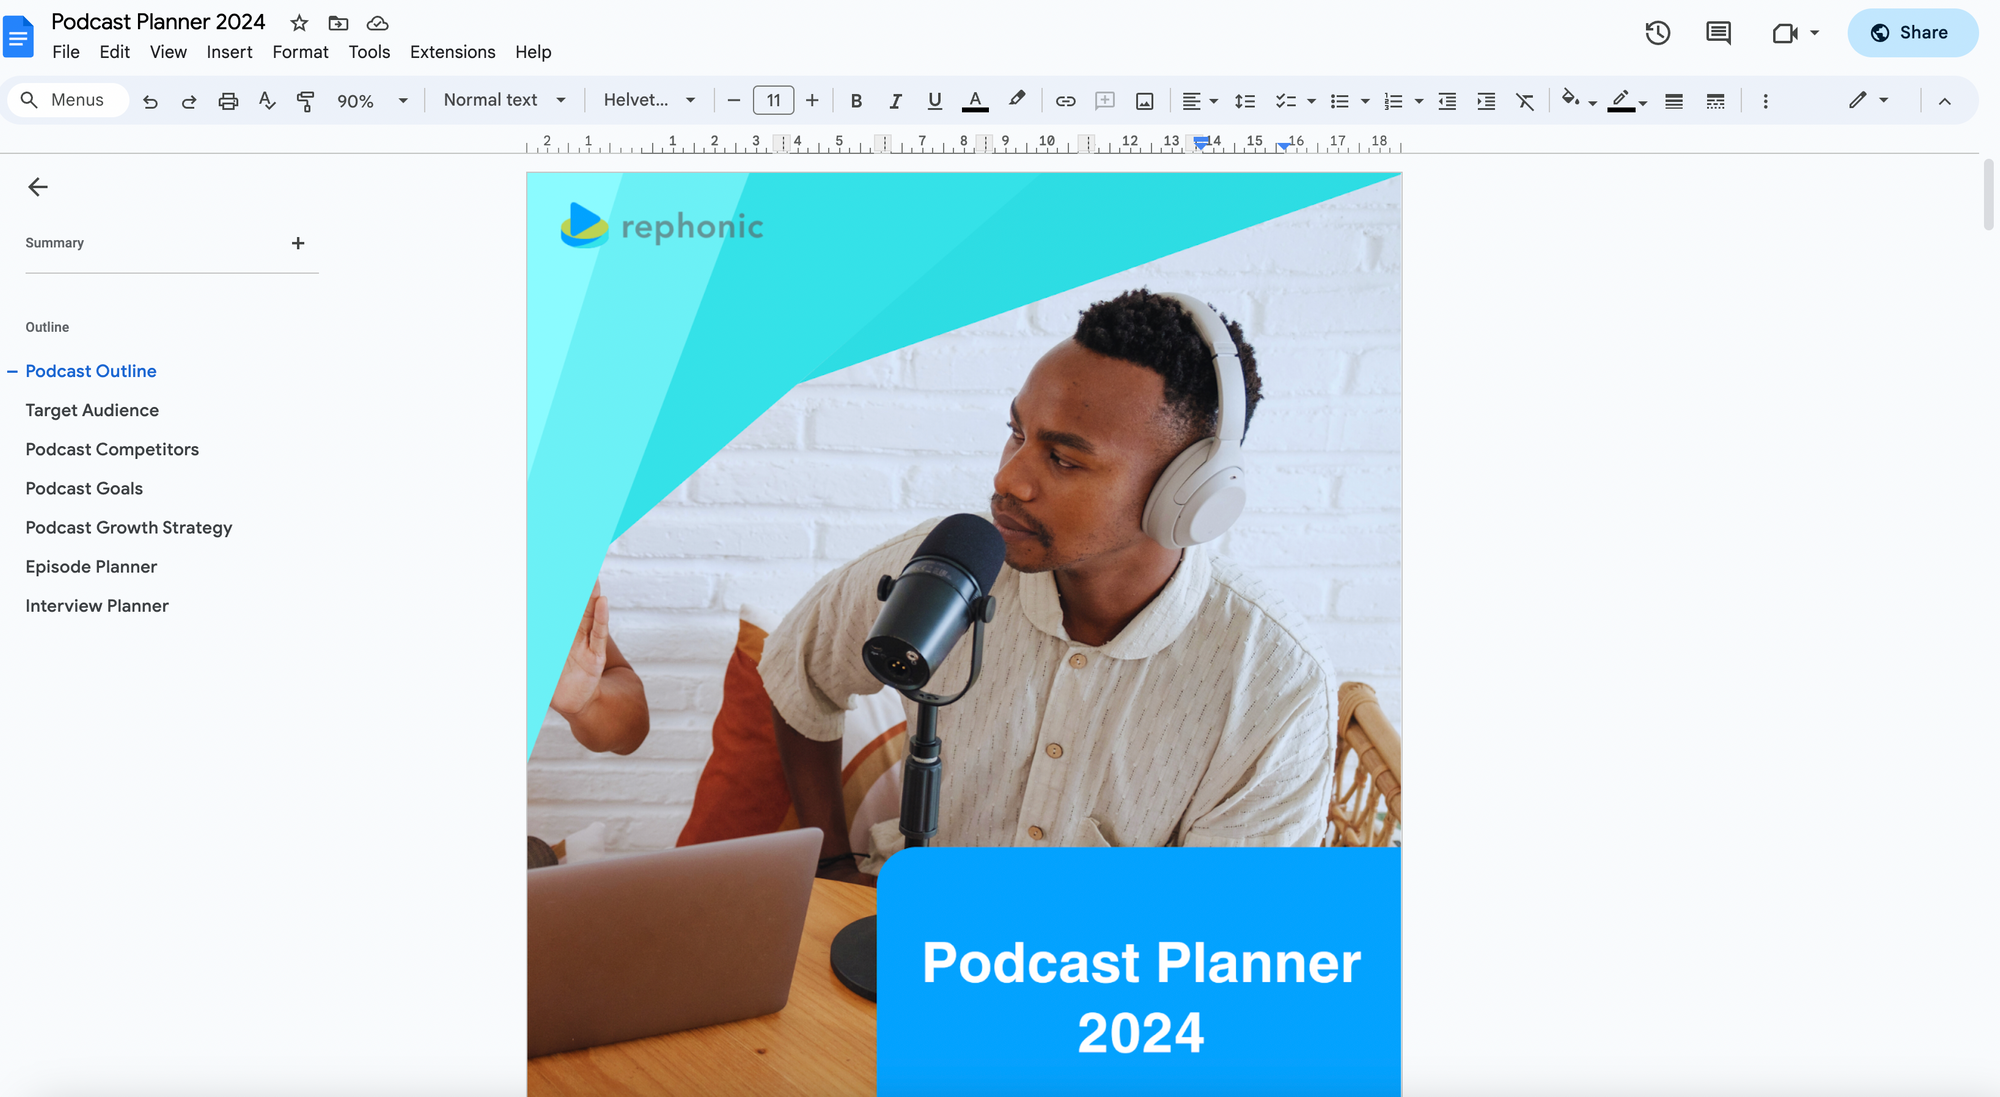 Podcast planner 2024